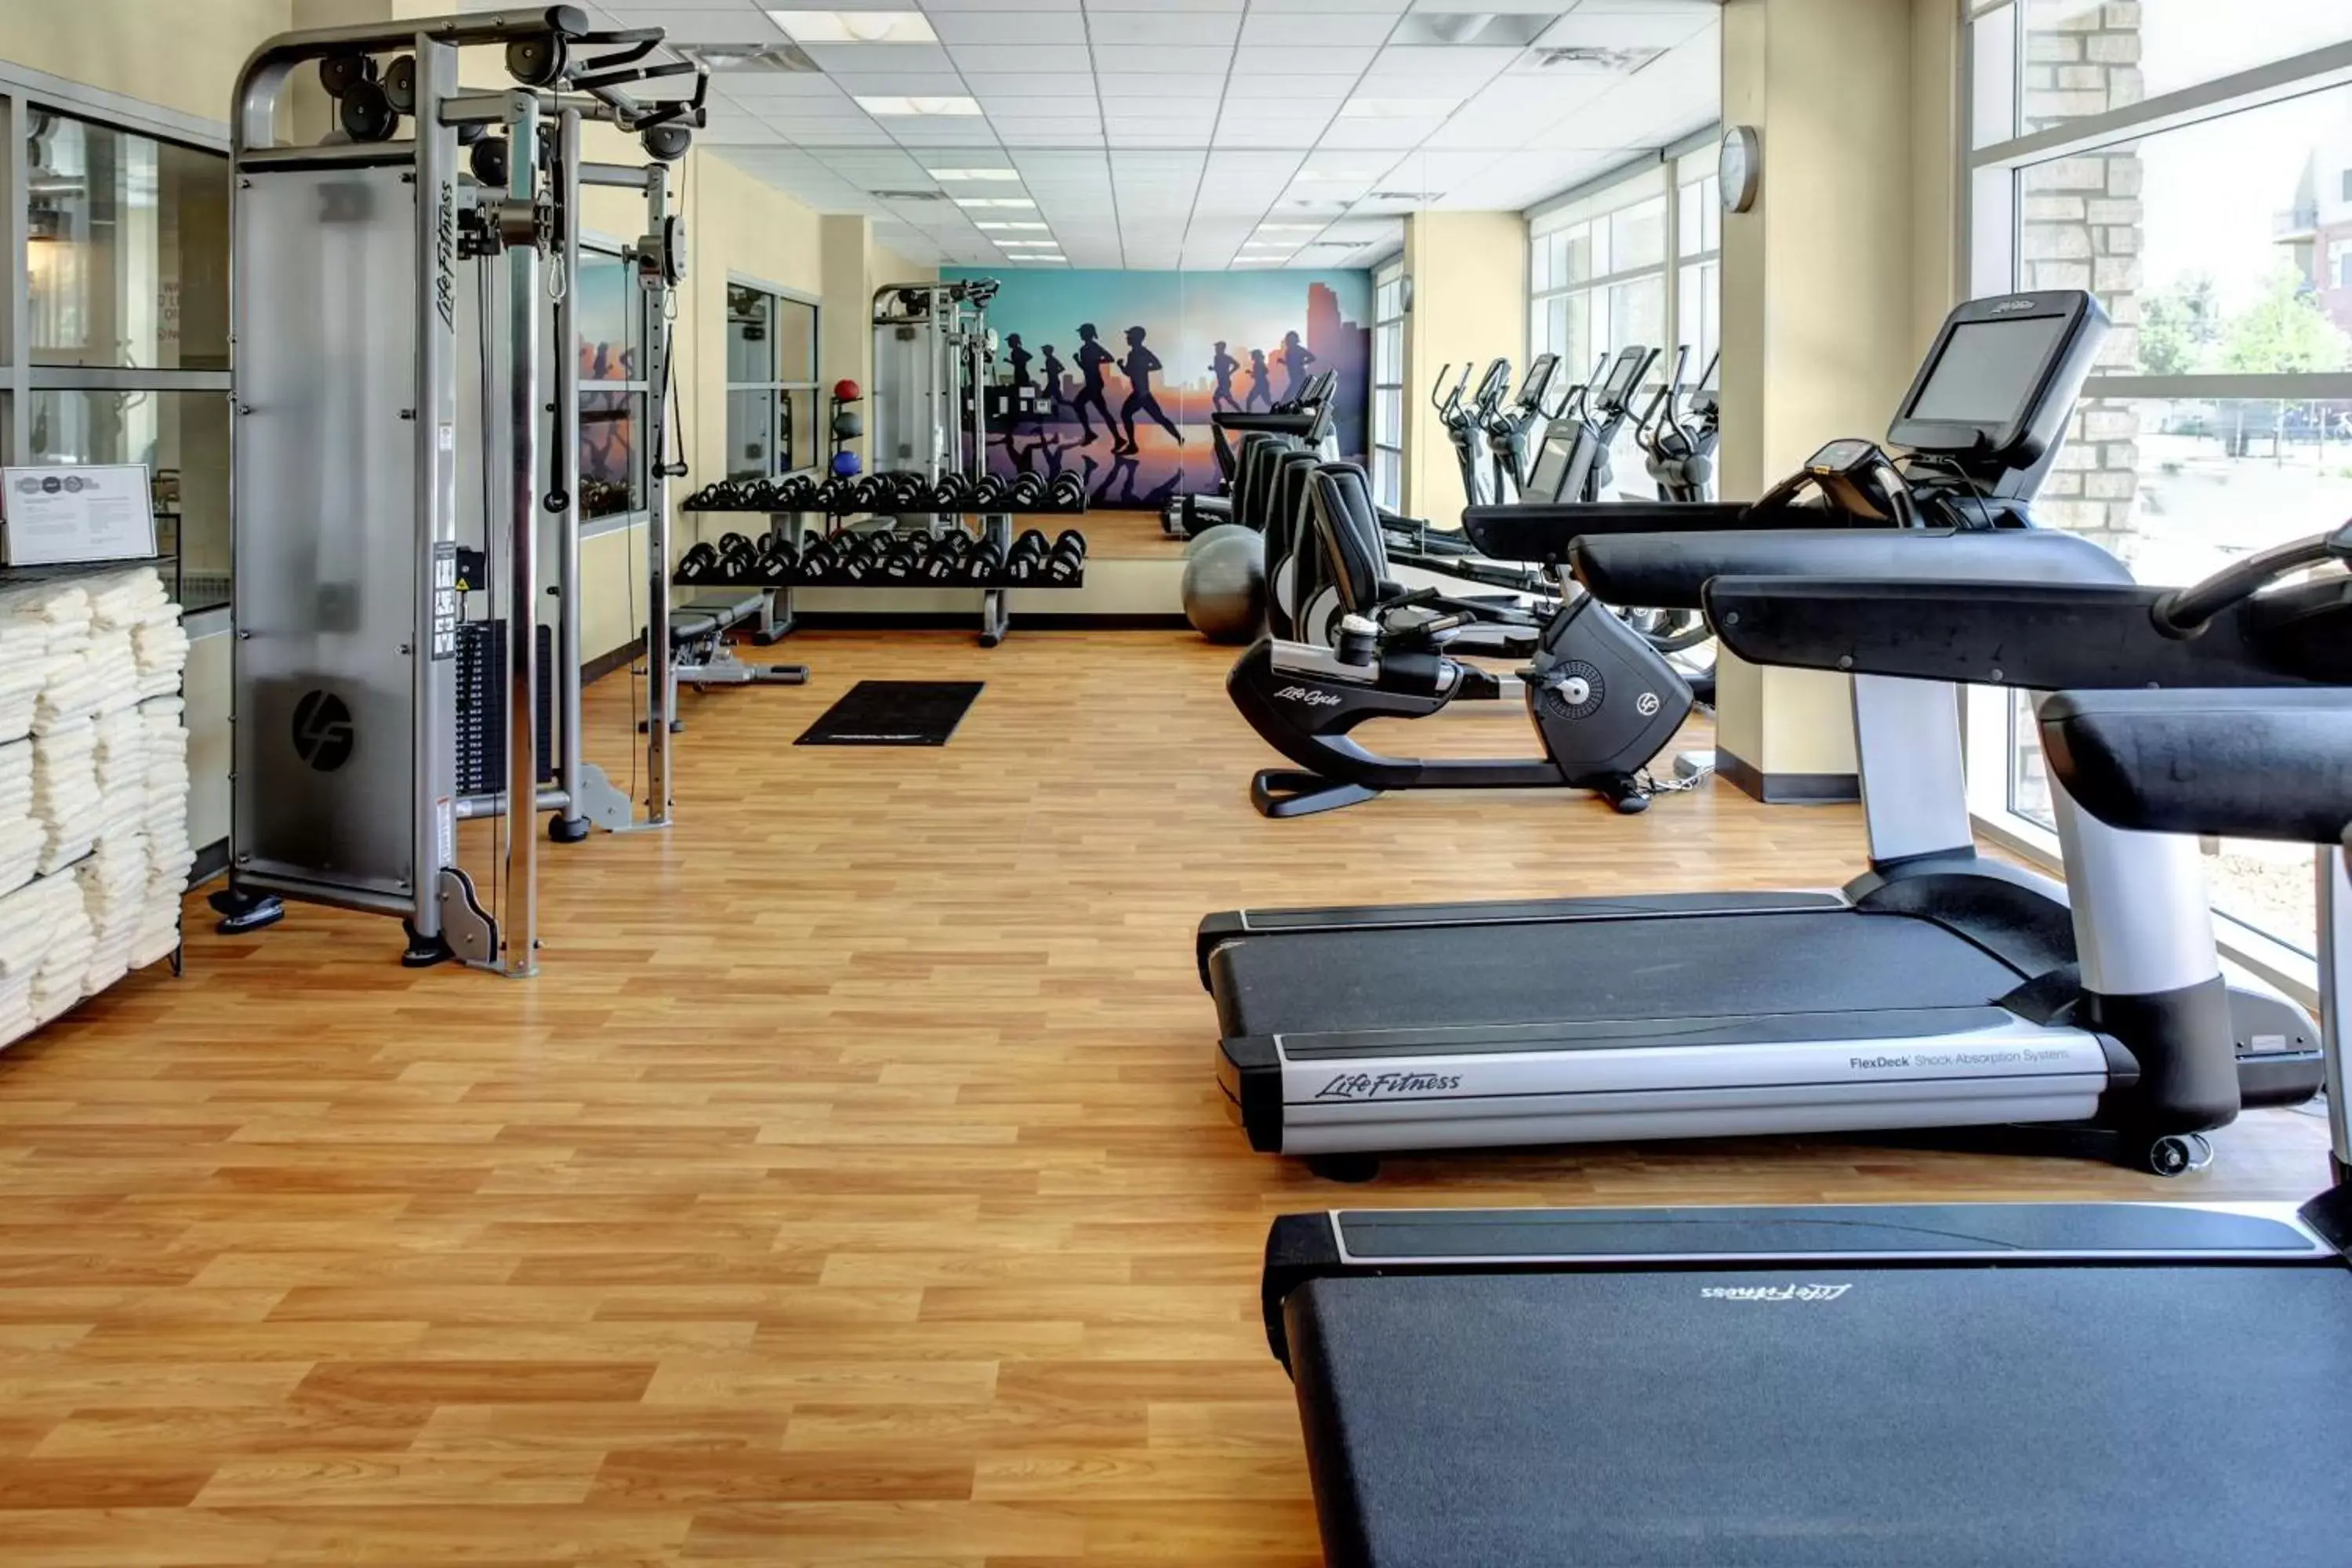 Fitness centre/facilities, Fitness Center/Facilities in Hyatt Place Boulder/Pearl Street